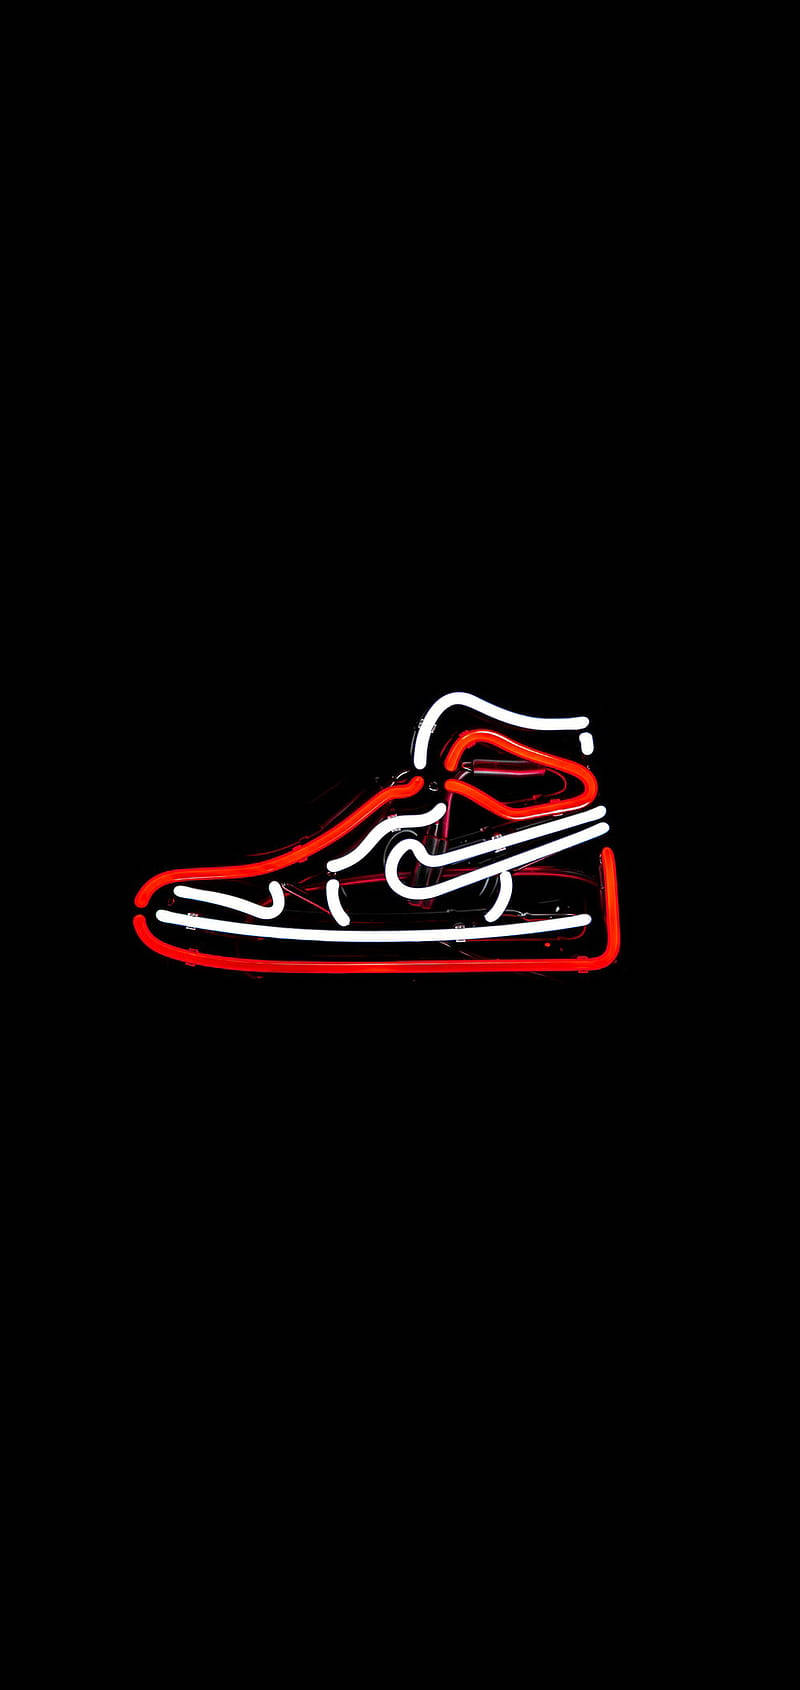 Neon Nike Air Jordan 1 Background